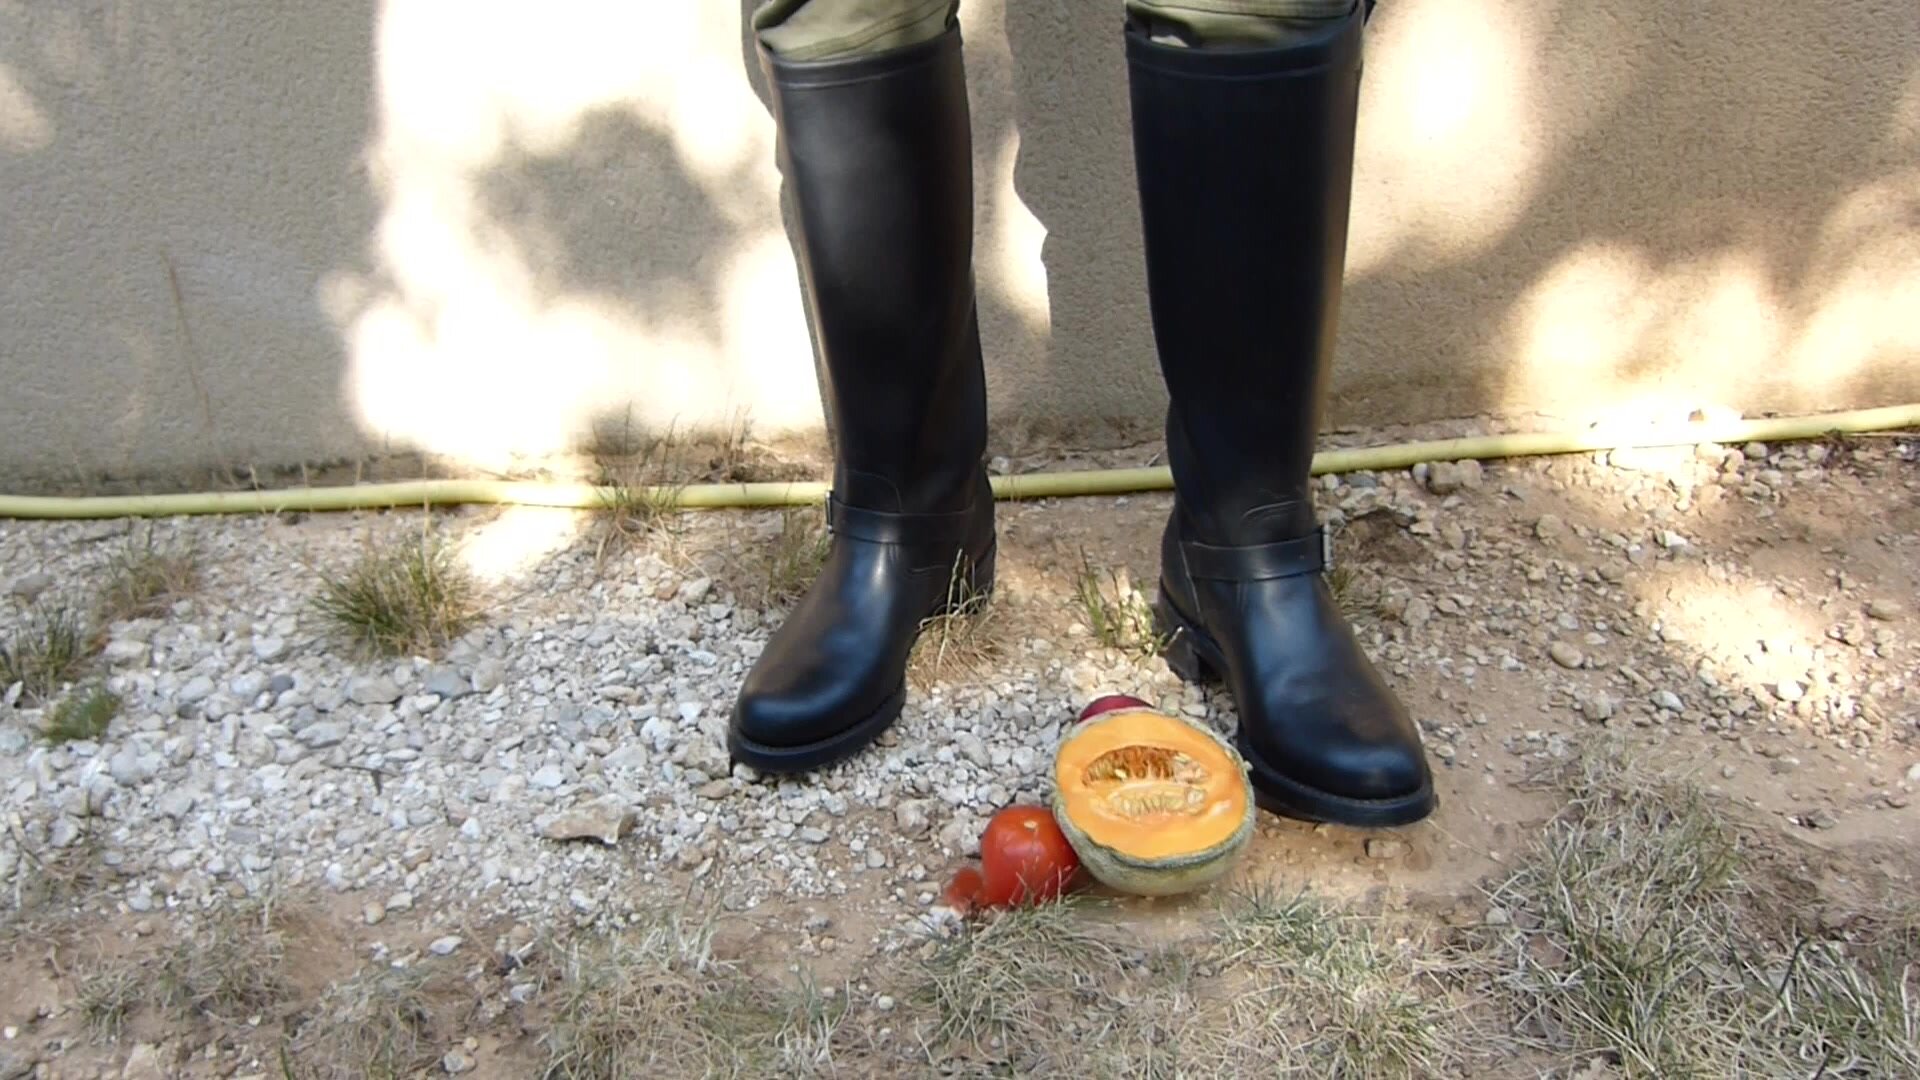 Chippewa Engineer boots crush rotten fruits